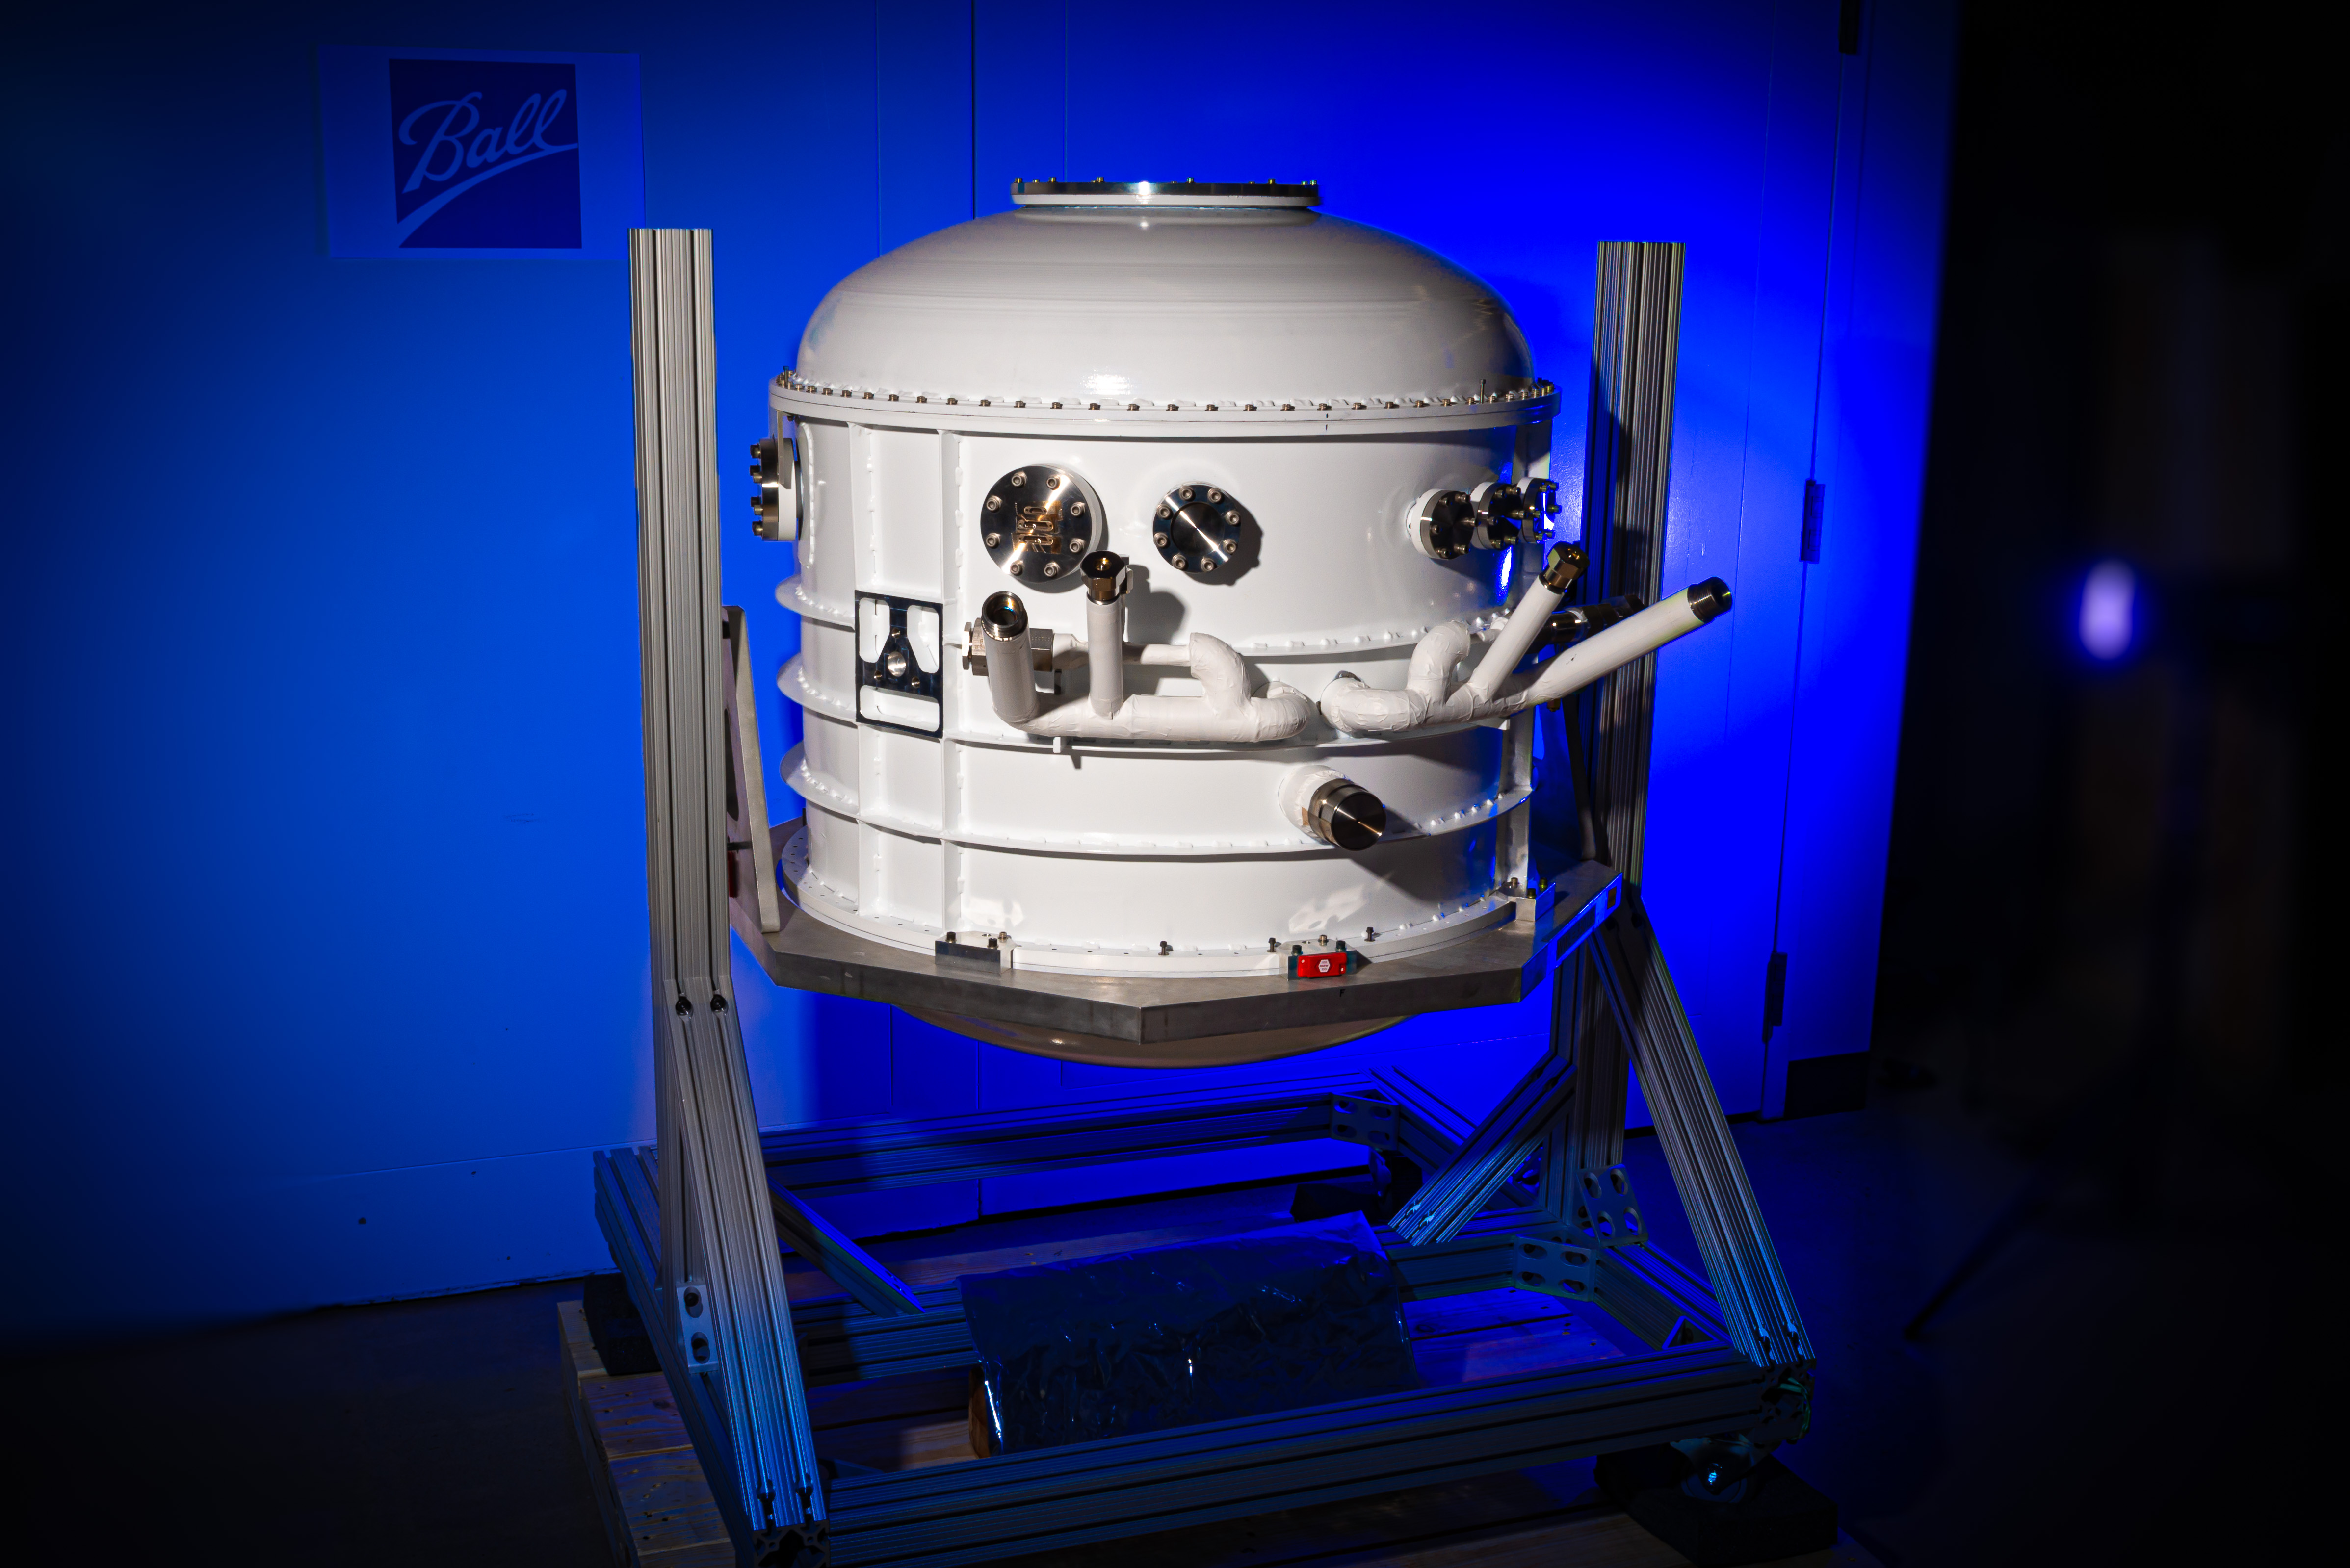 An image of a cryostat built by Ball Aerospace.